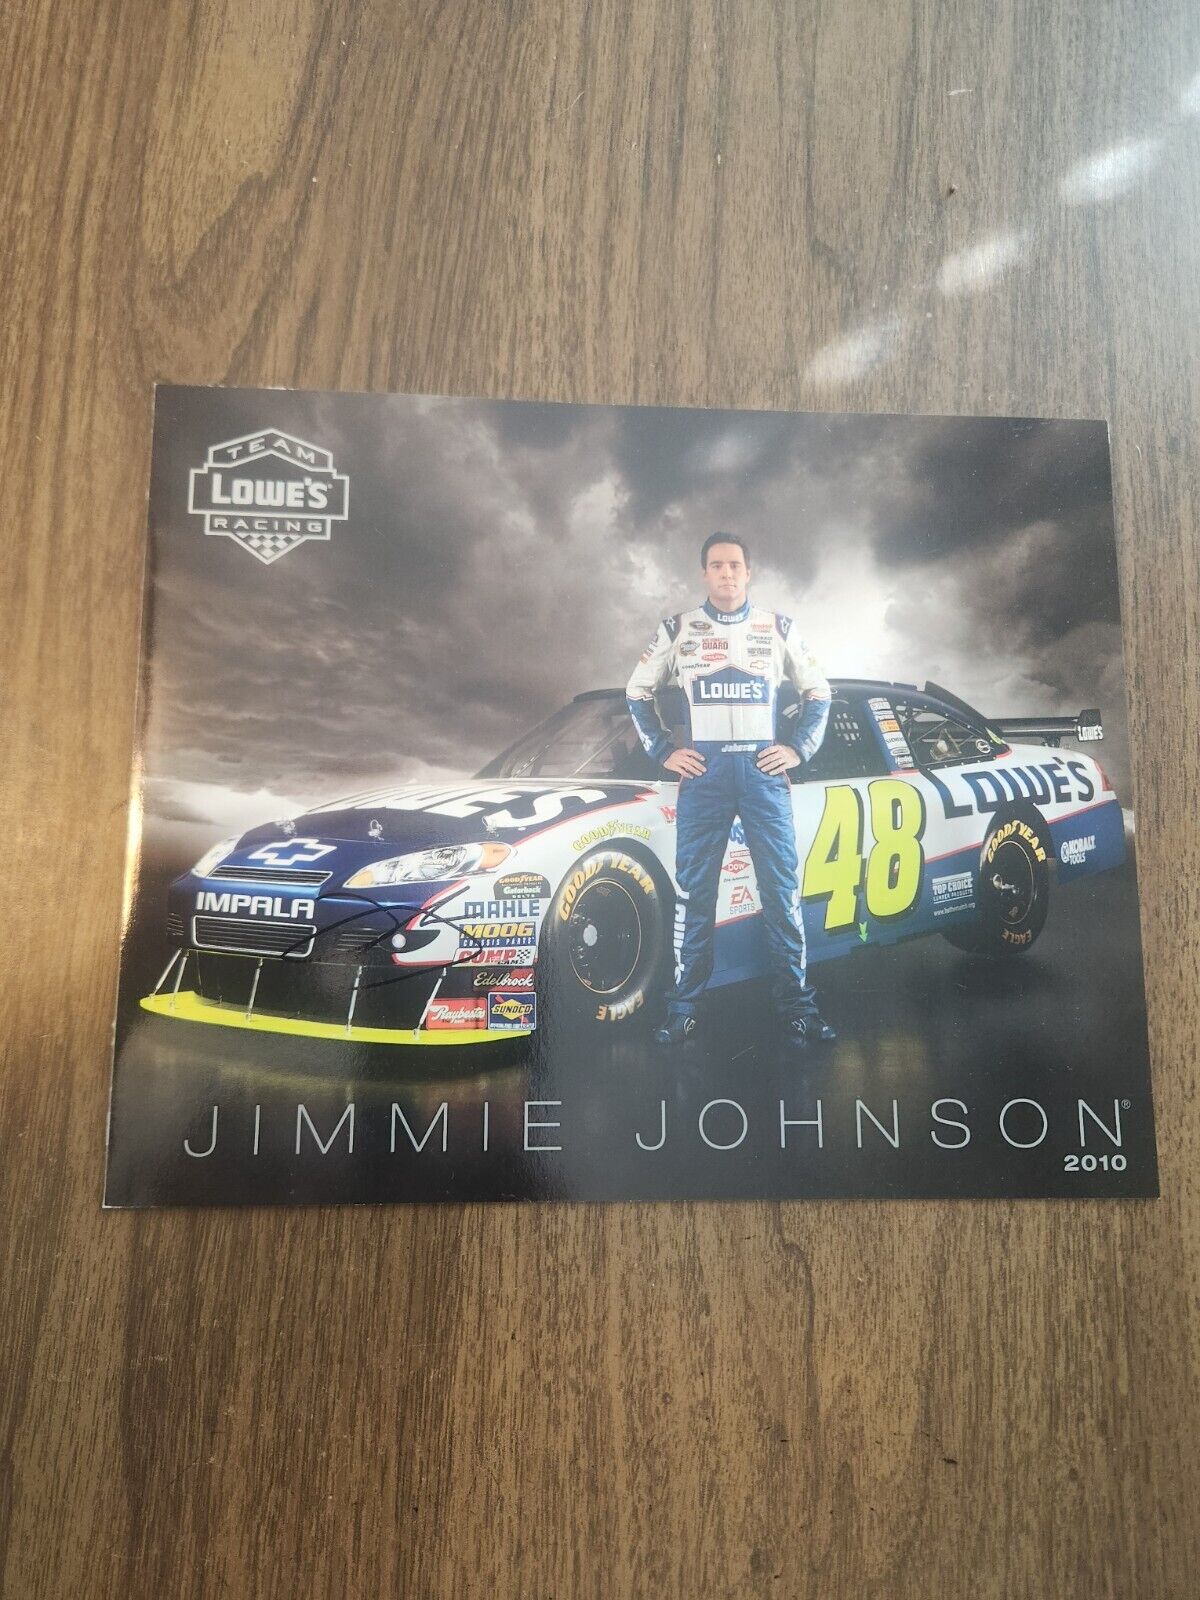 Jimmie Johnson # 48 Autographed 2010 Lowe's Racing Hero Card